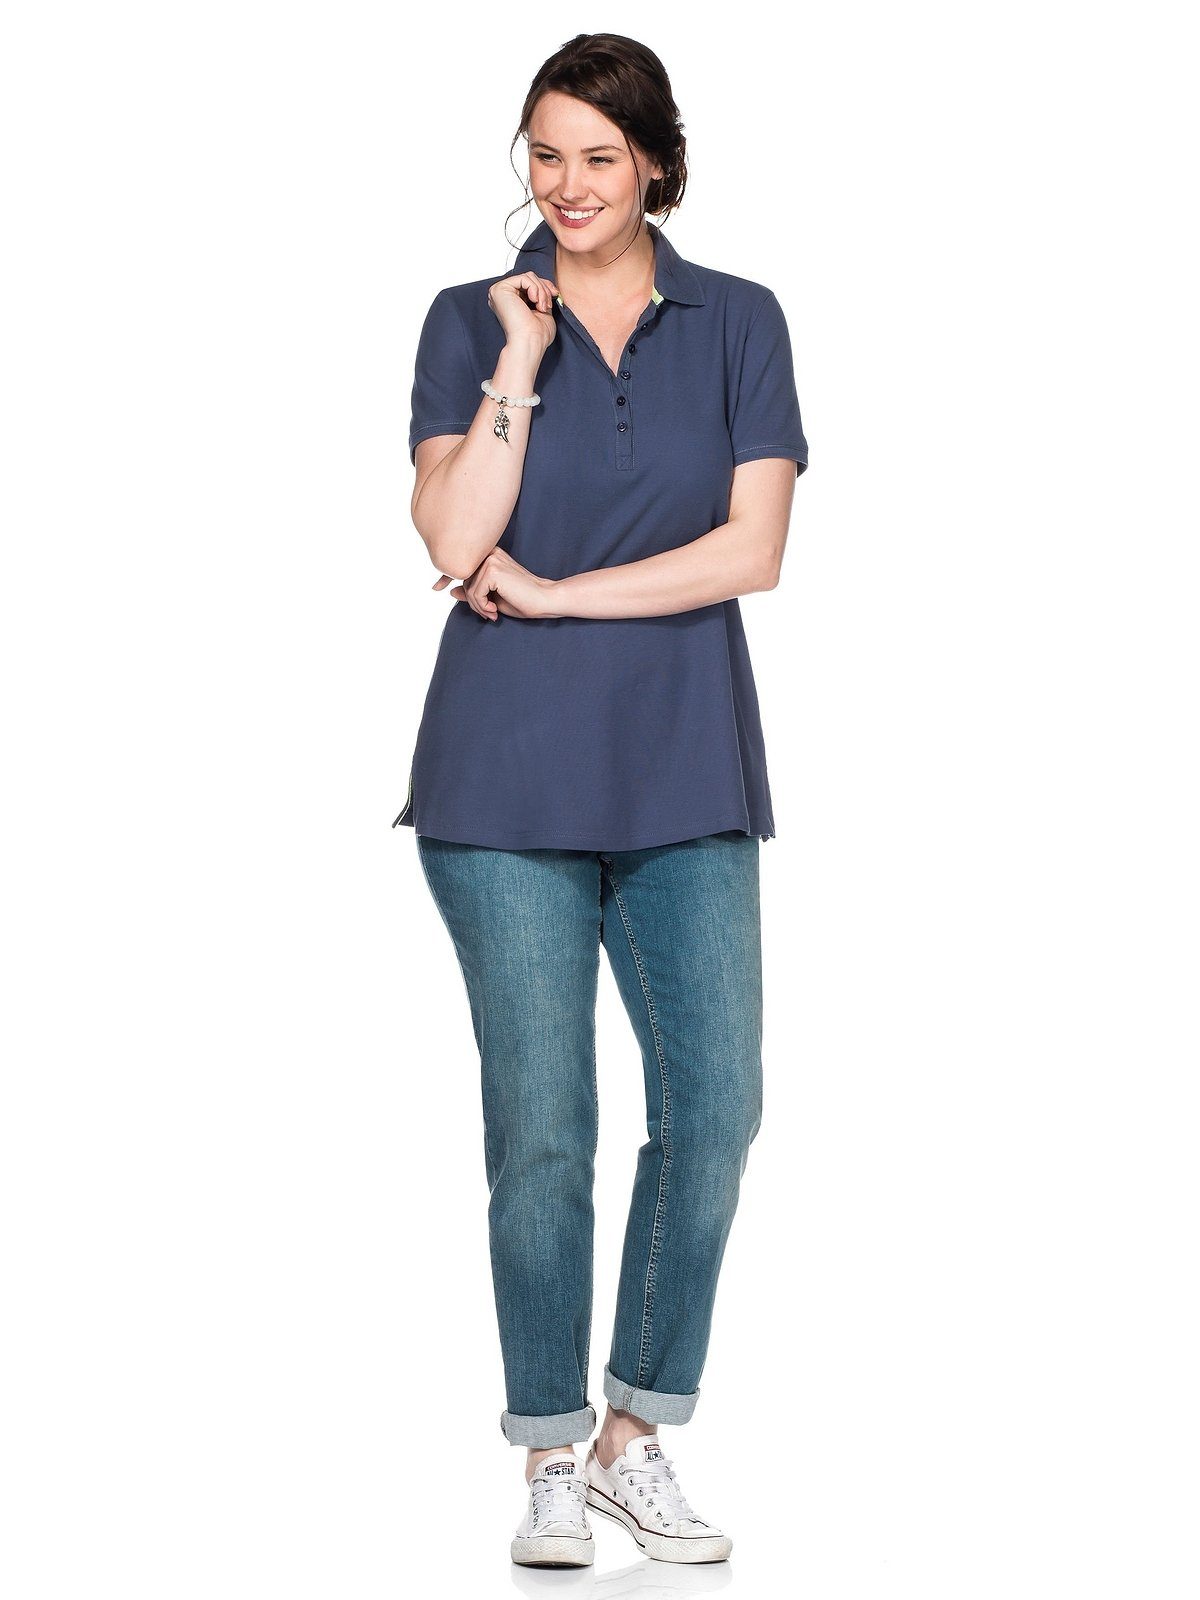 T-Shirt Größen Große Sheego jeansblau